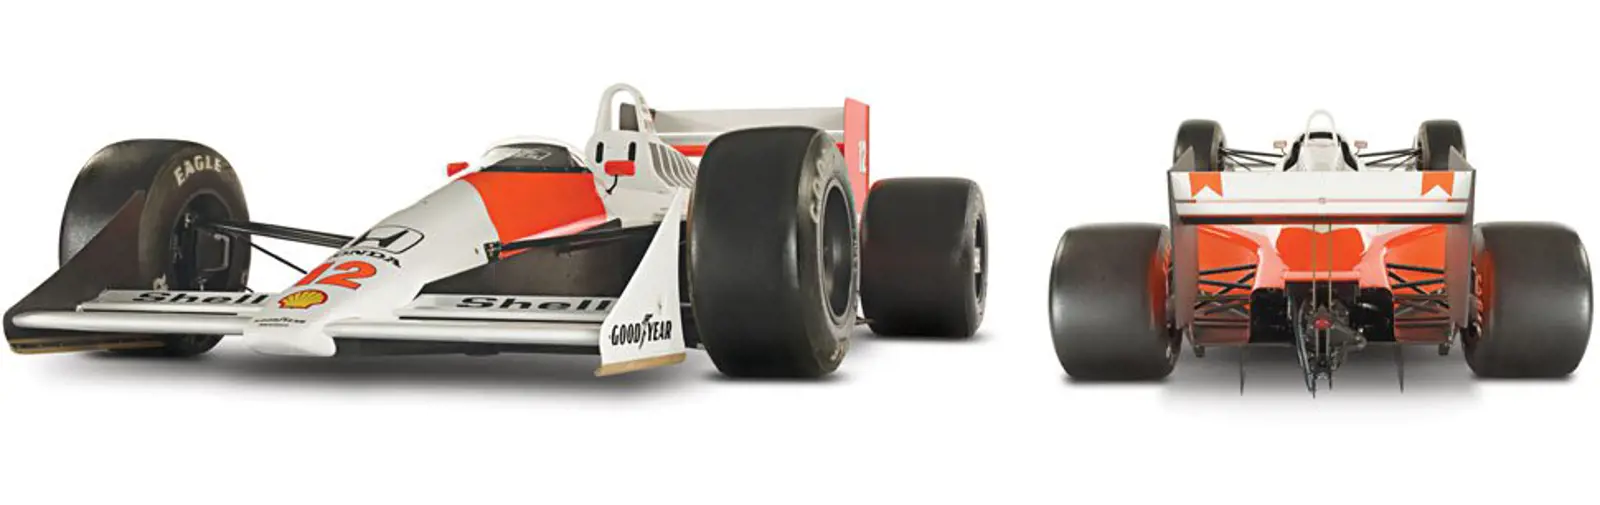 The Formula 1 McLaren MP4/4 - McLaren Legacy Cars